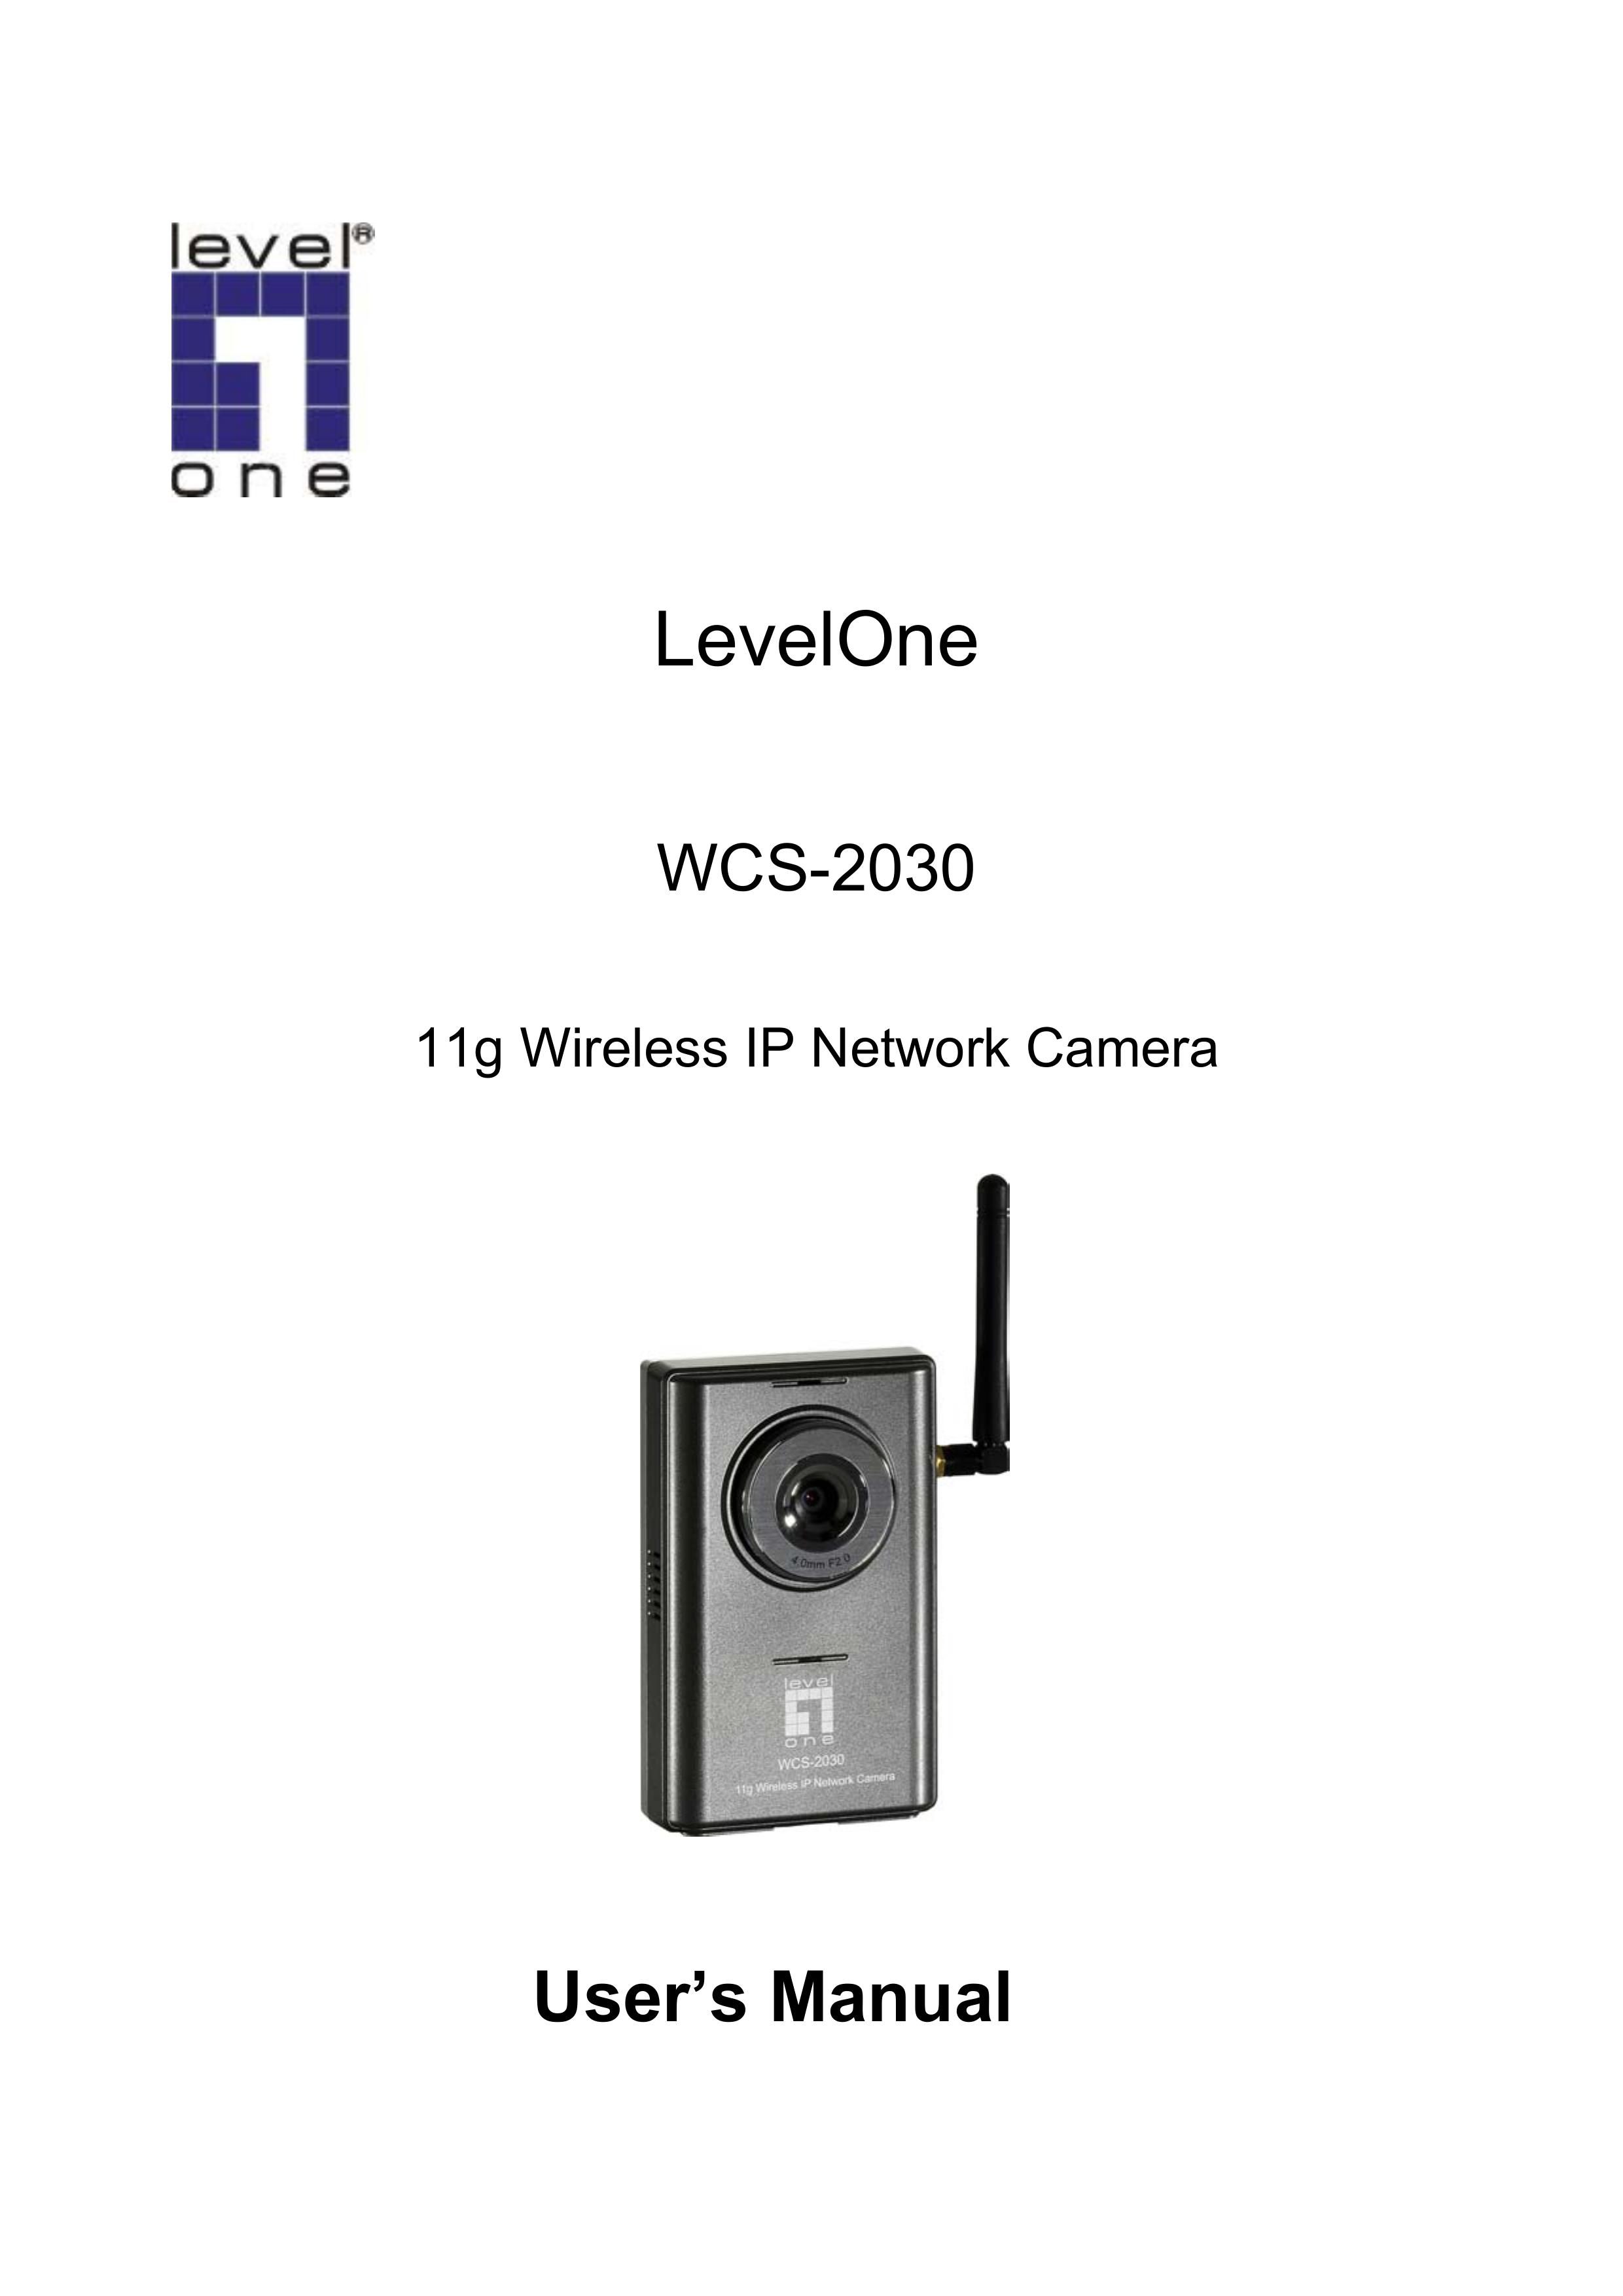 LevelOne WCS-2030 Security Camera User Manual